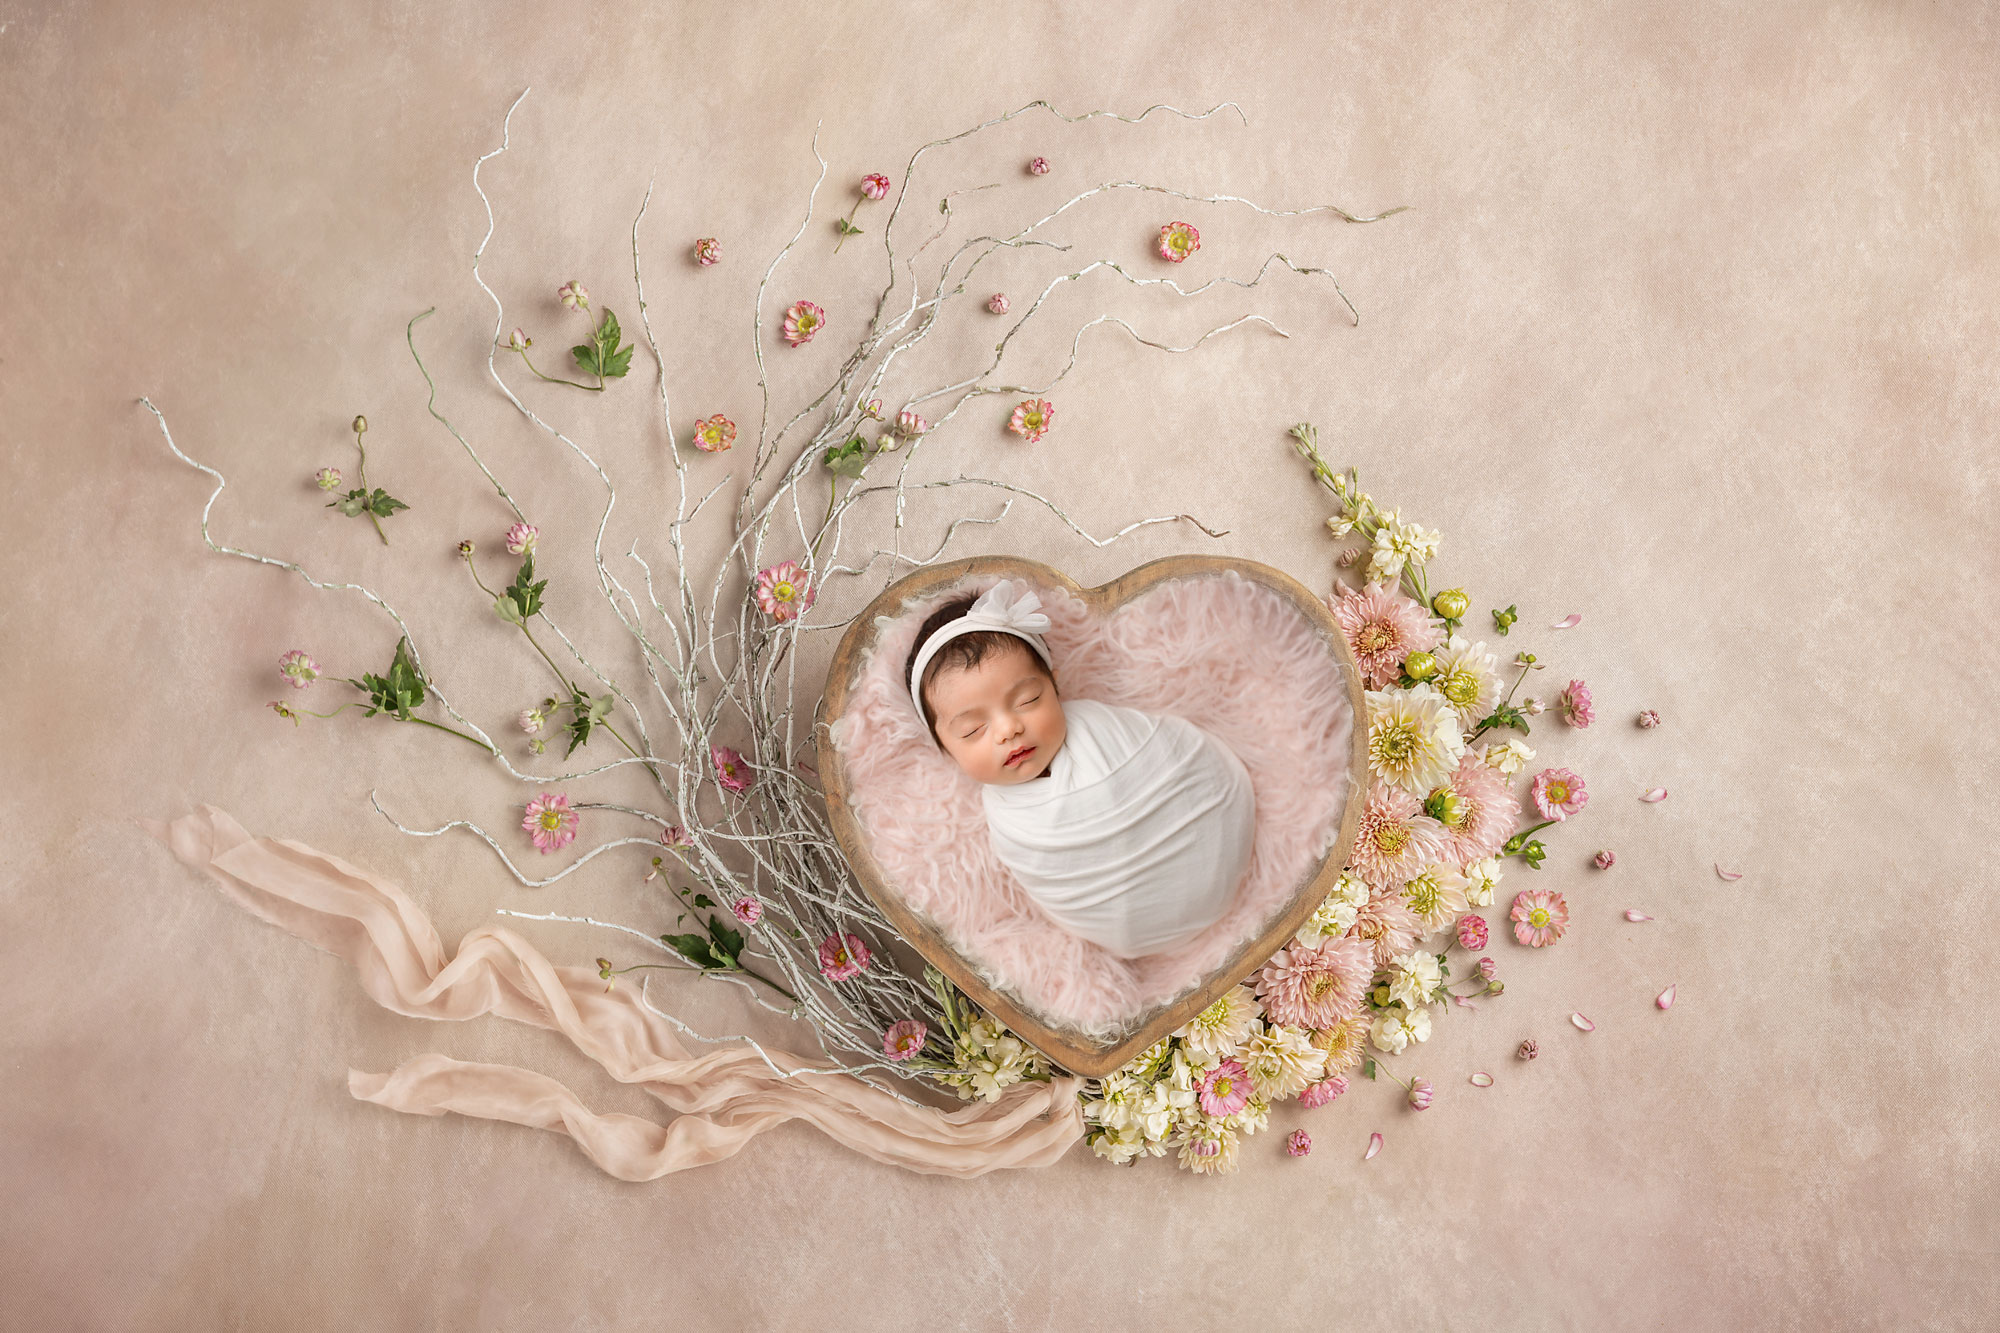 One set up 10 different newborn photos